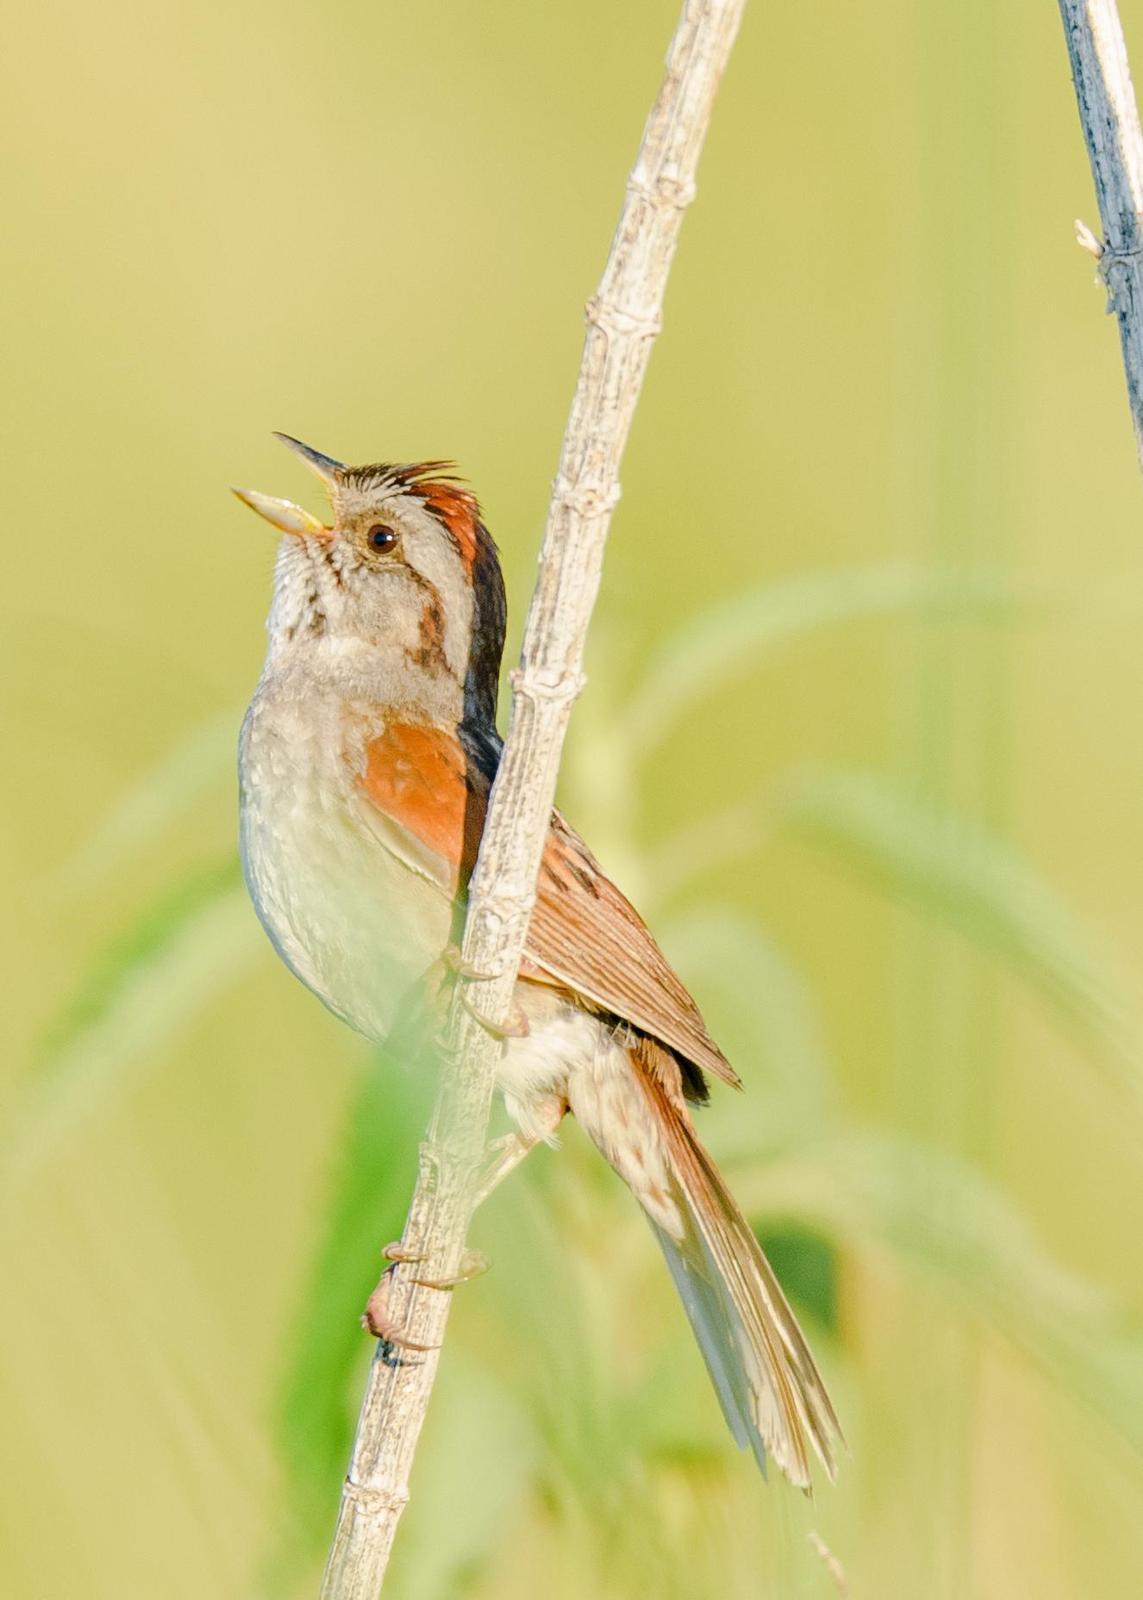 Swamp Sparrow Photo by Keshava Mysore